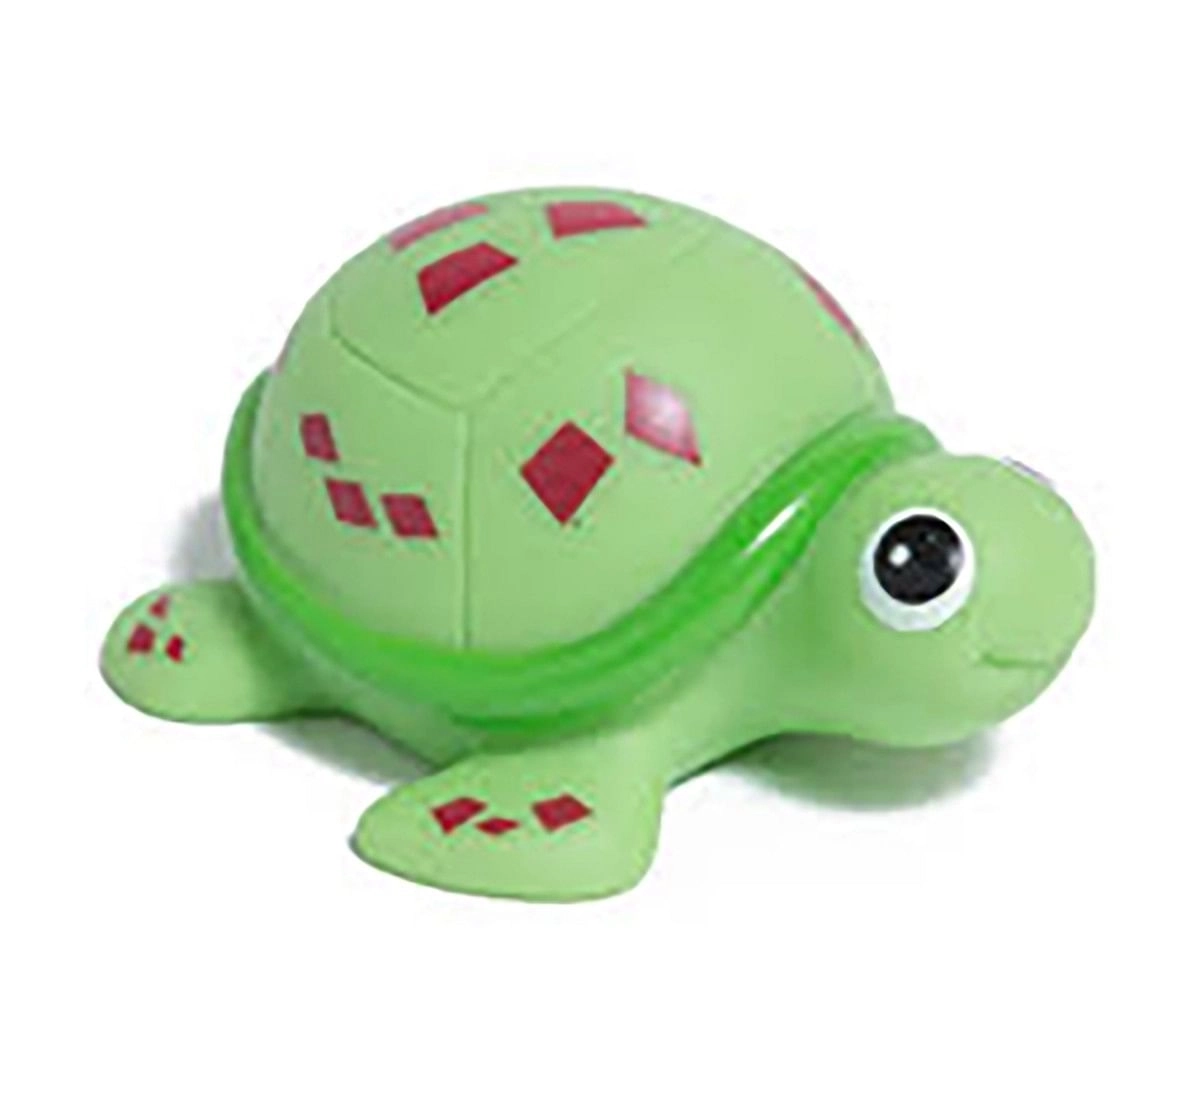 Hamleys Splash Light Up Turtle  -Green Bath Toys & Accessories for Kids age 18M + (Green)